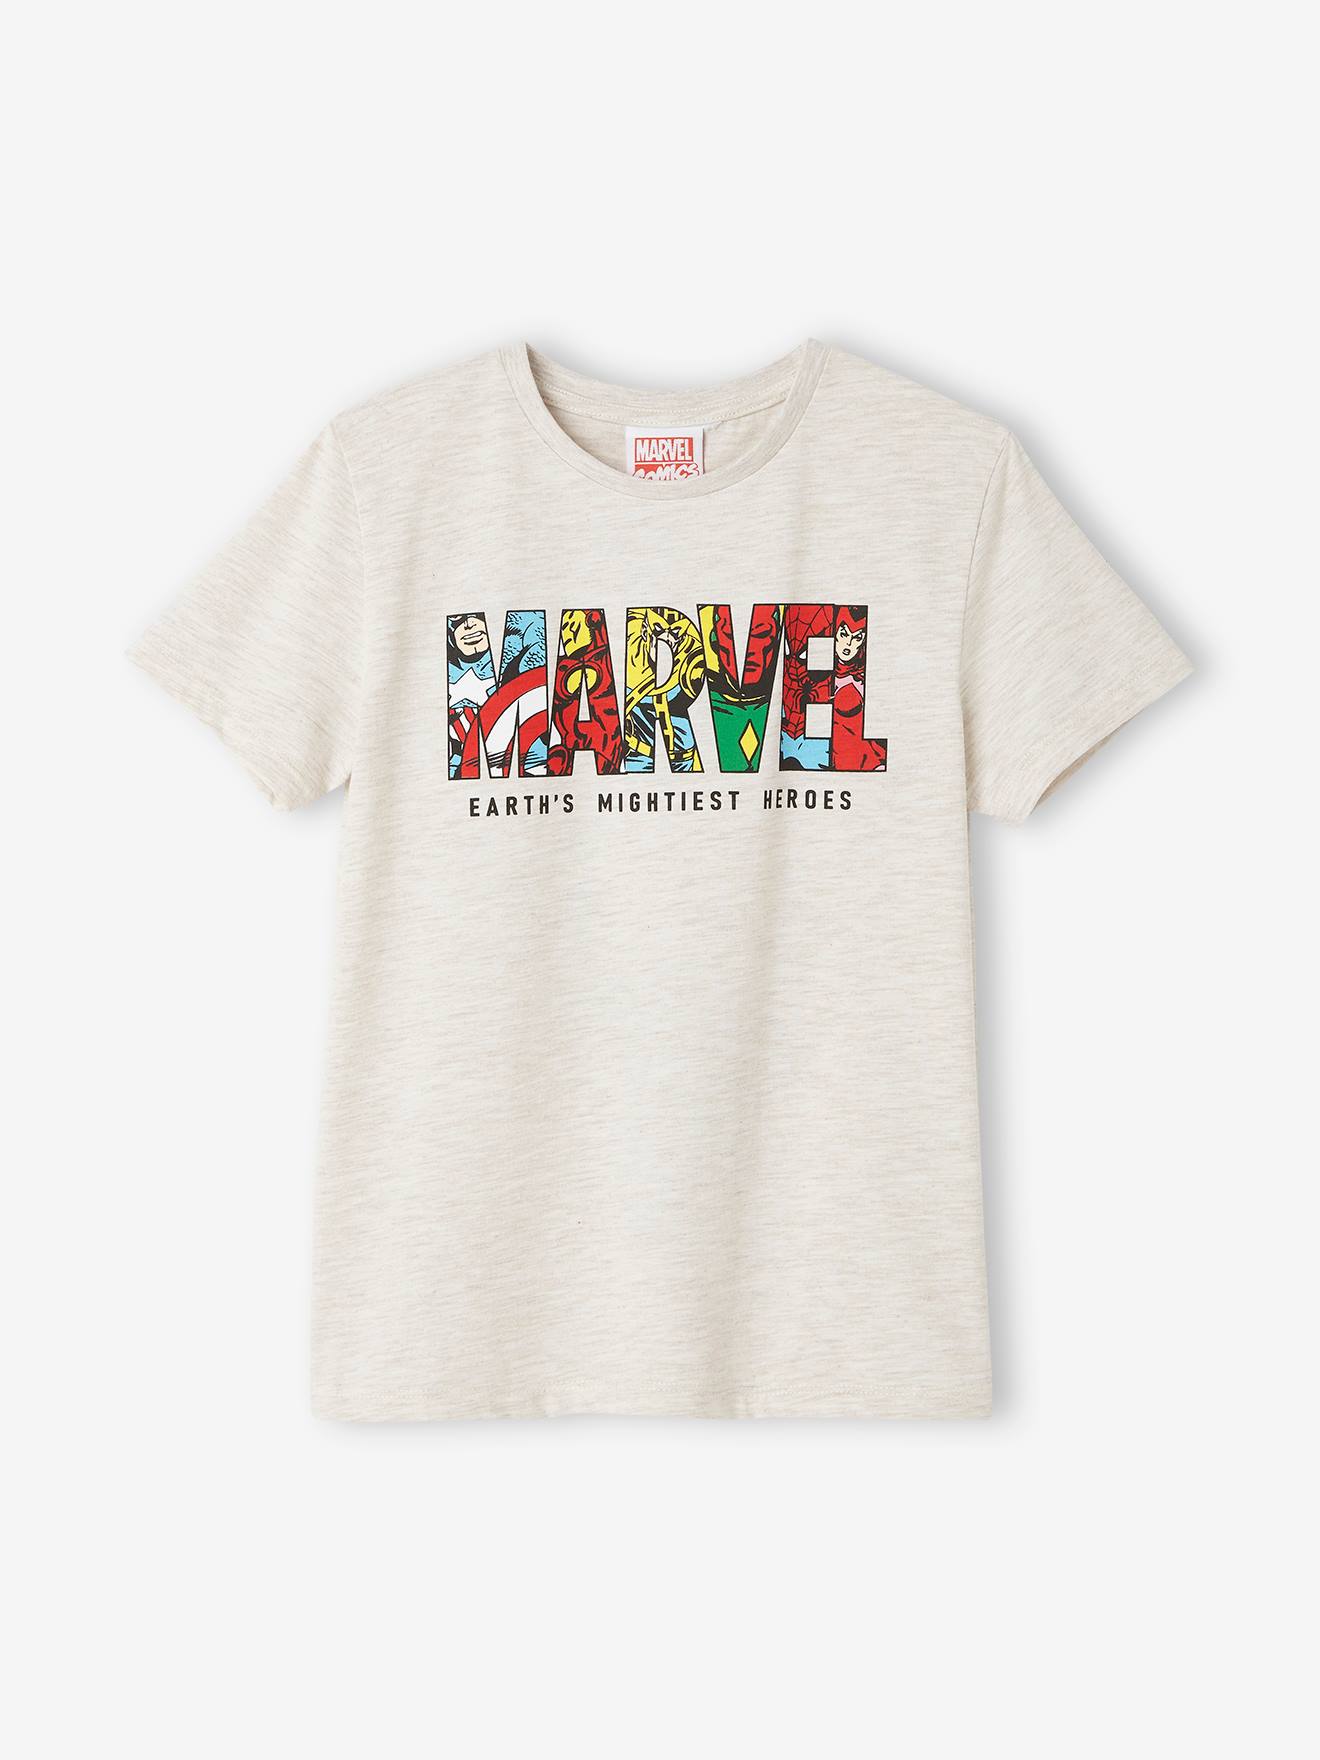 Marvel(r) T-Shirt for Boys marl beige